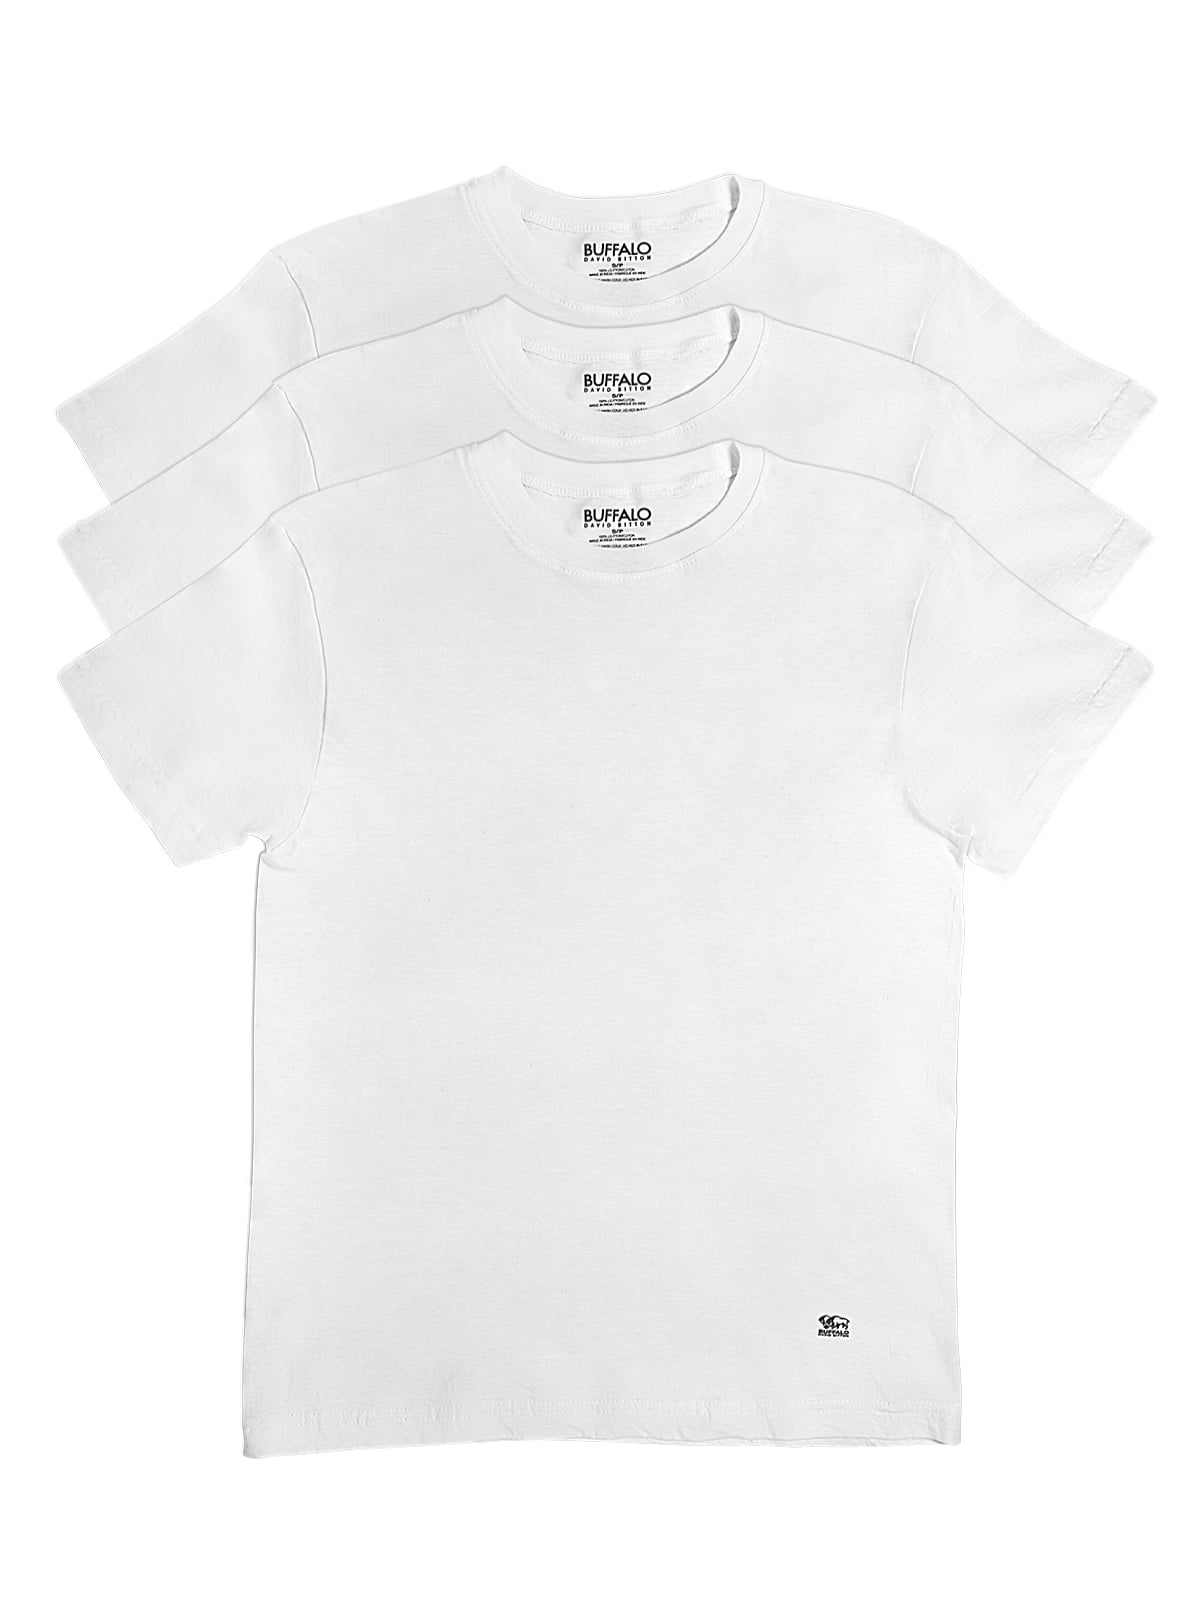 Buffalo David Bitton | 3-Pack Men\'s White Crew Neck T-Shirt | 100% Cotton |  Tagless (White, Medium)